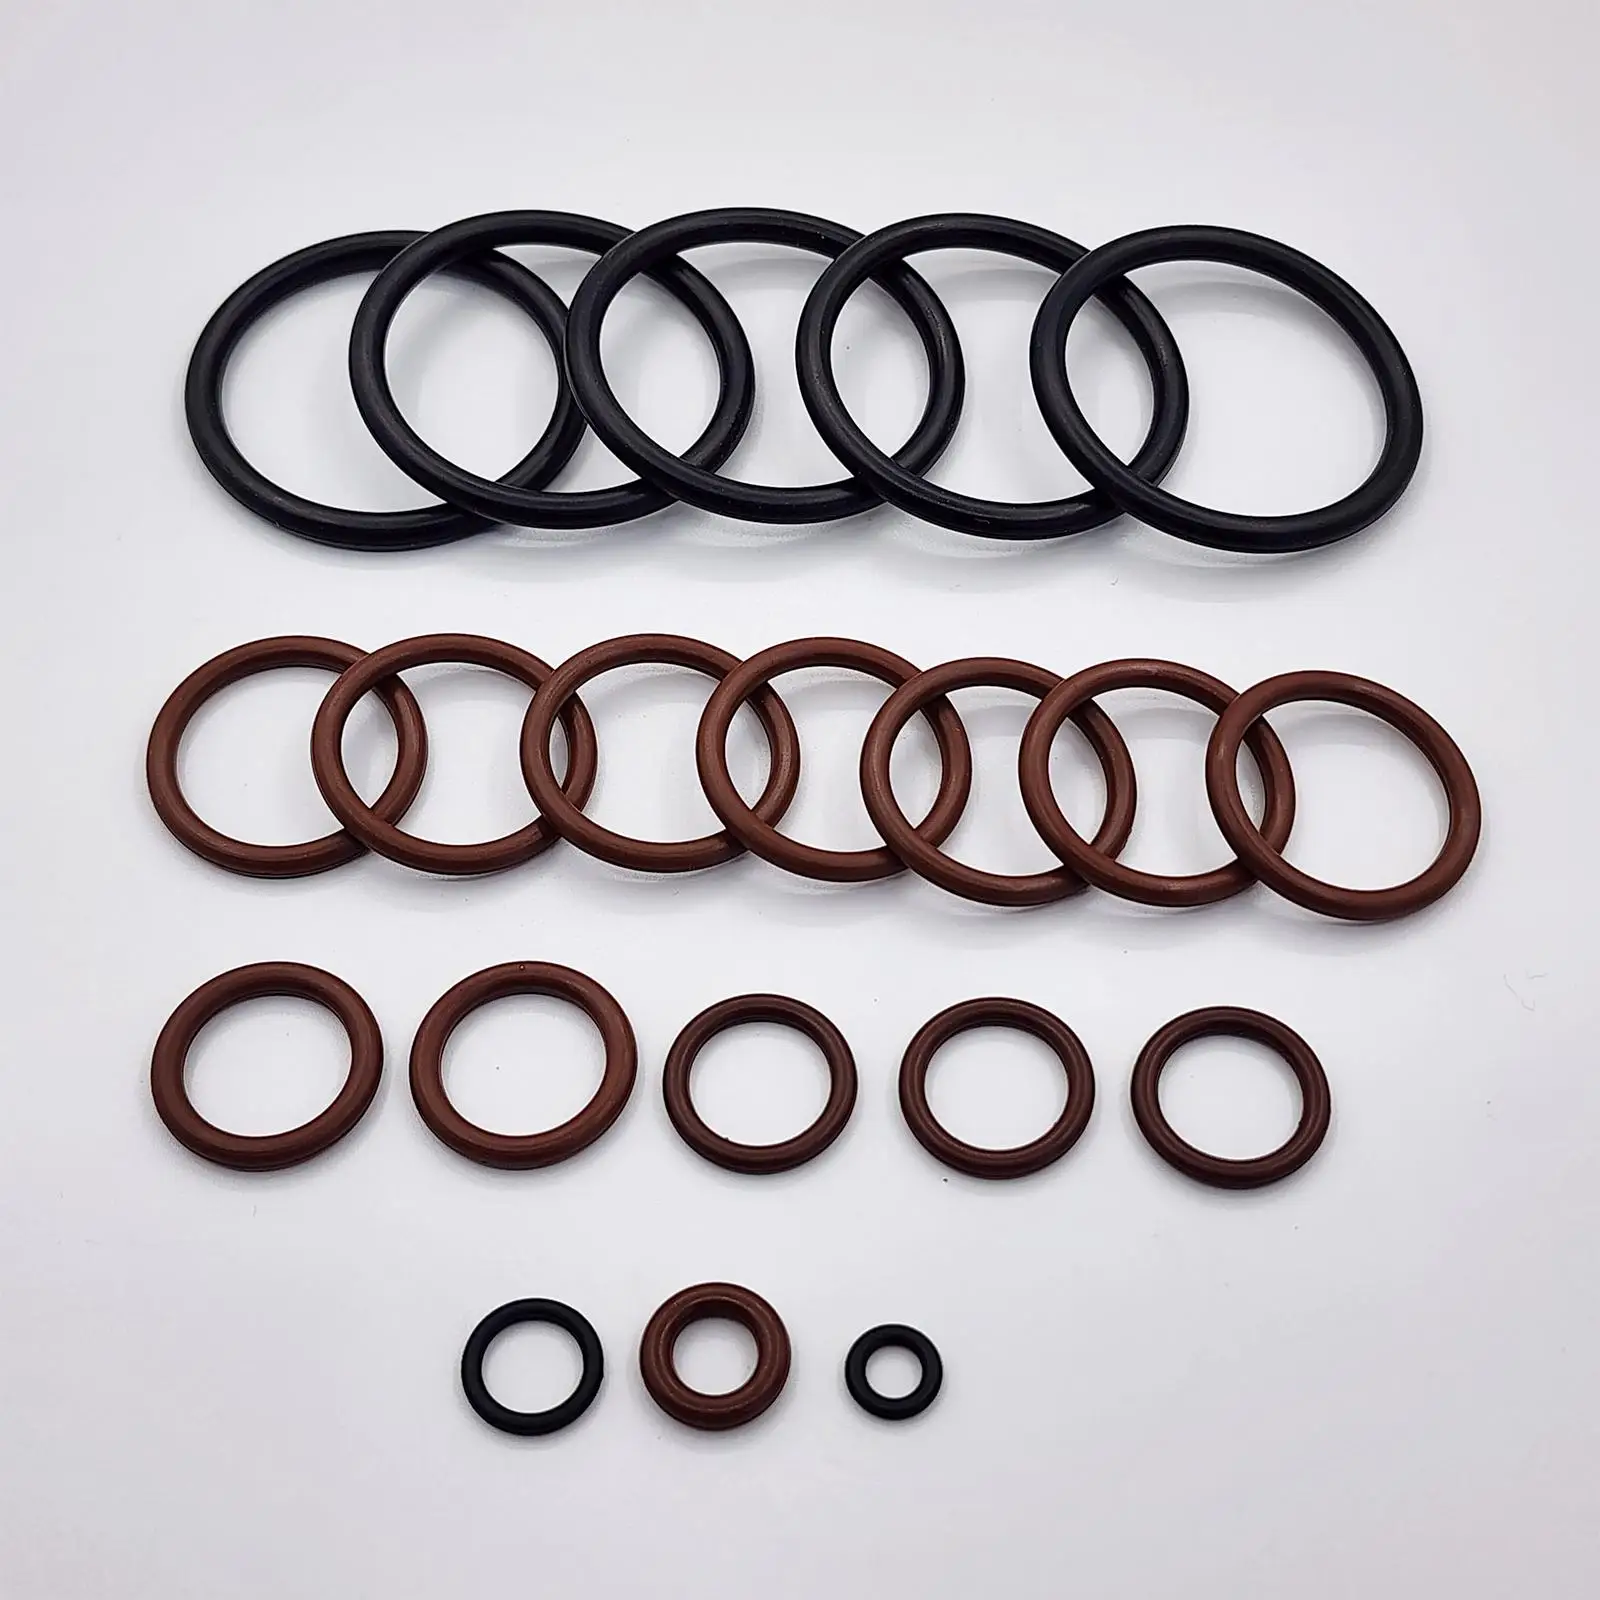 Cooling System O-Ring Kit O Ring Assortment Kit for BMW E46 M52 M54 Car